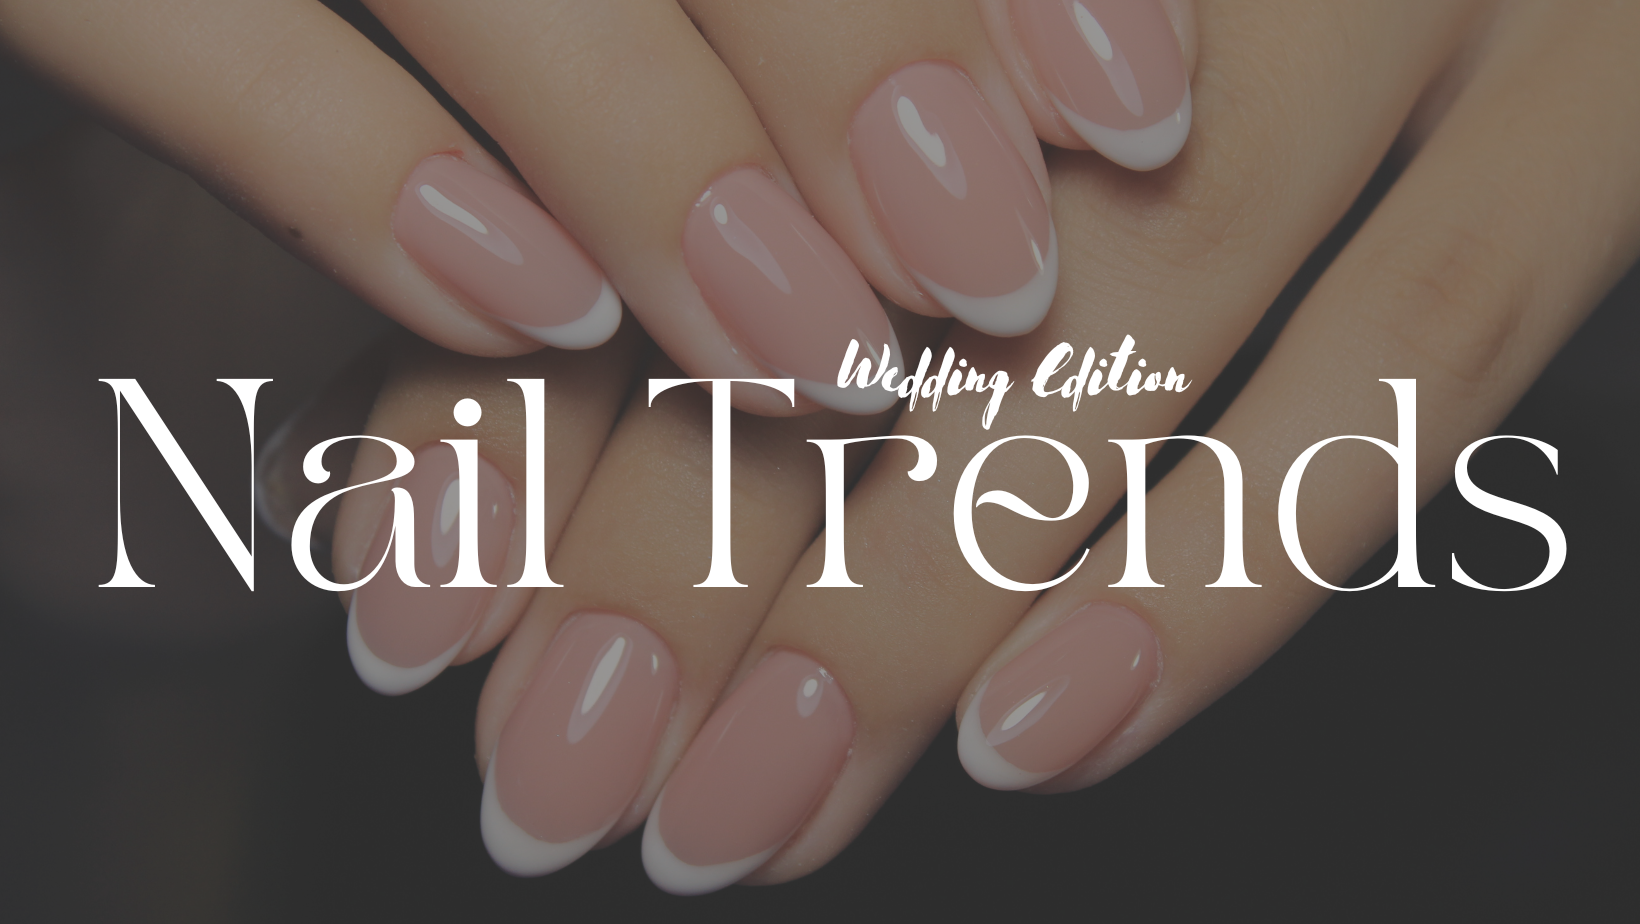 Spring Nail Trends | Nail Trends this Spring | Nail trends to try out this spring to freshen up your look